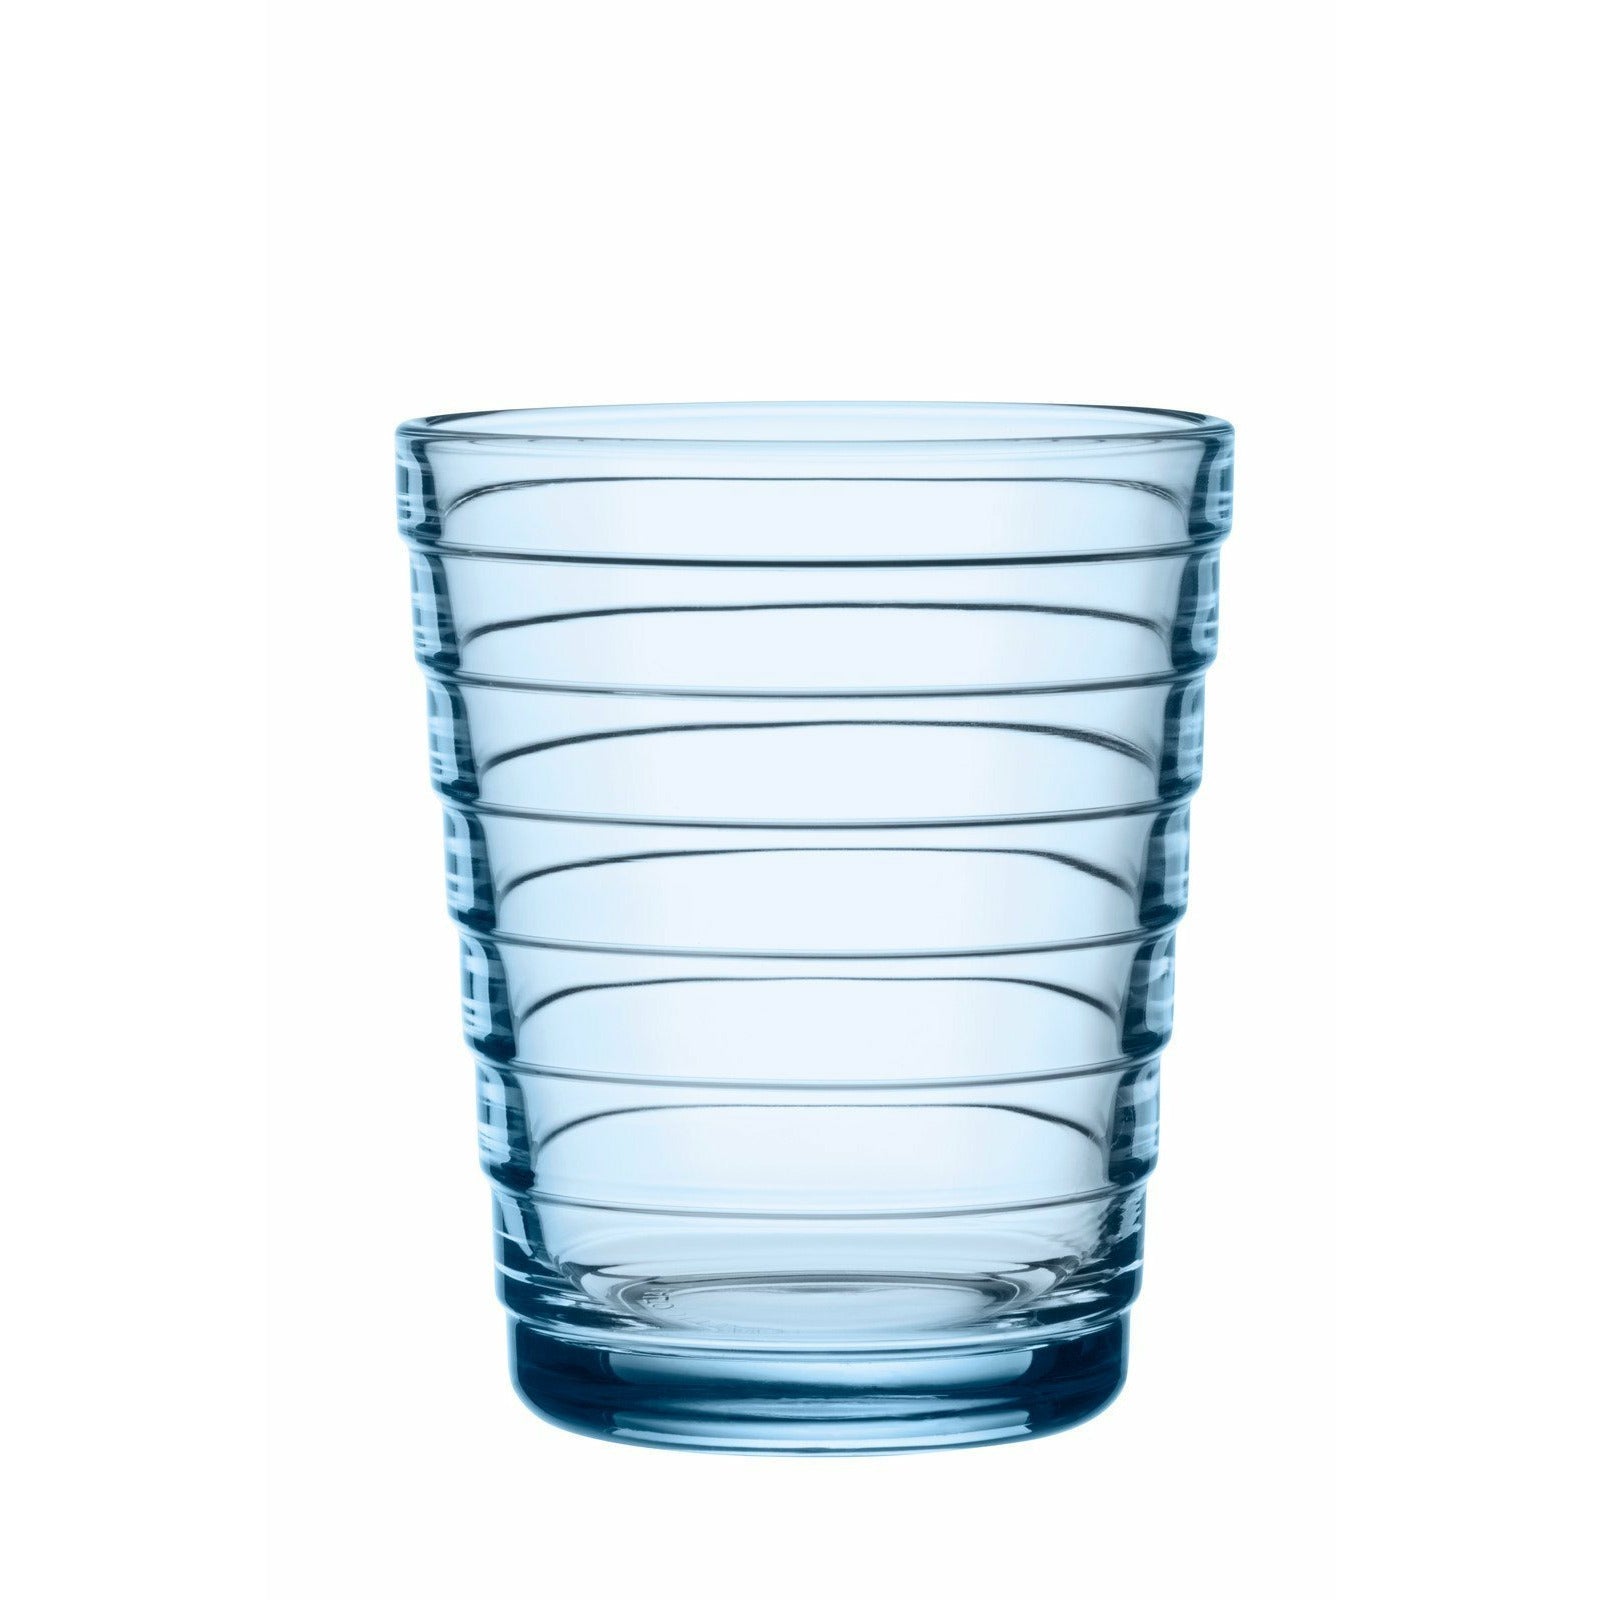 Iittala Aino Aalto Trinkglas Aqua 22cl, 2pcs.